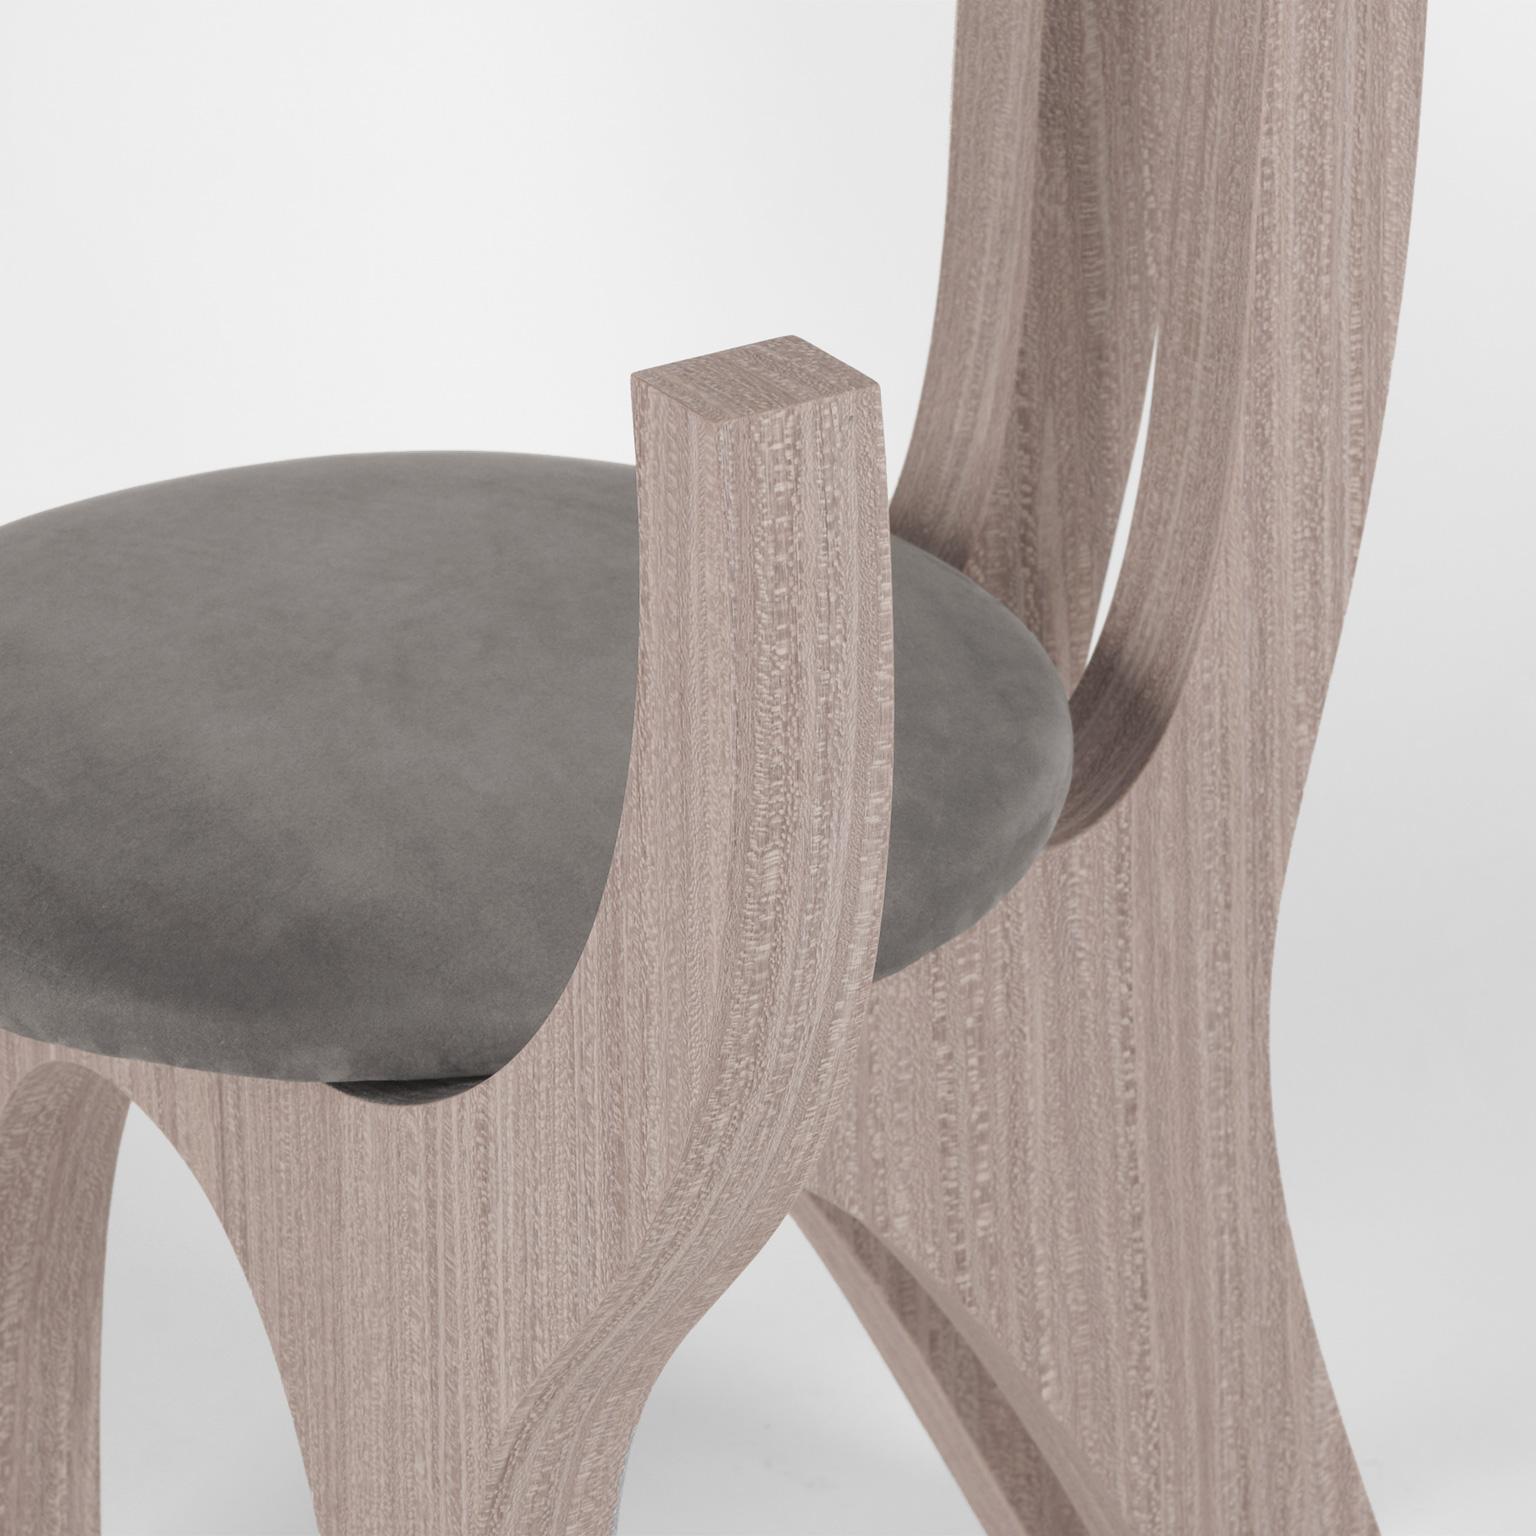 Contemporary Limited Edition Ash Wood Armchair, Zero V2 by Edizione Limitata For Sale 7